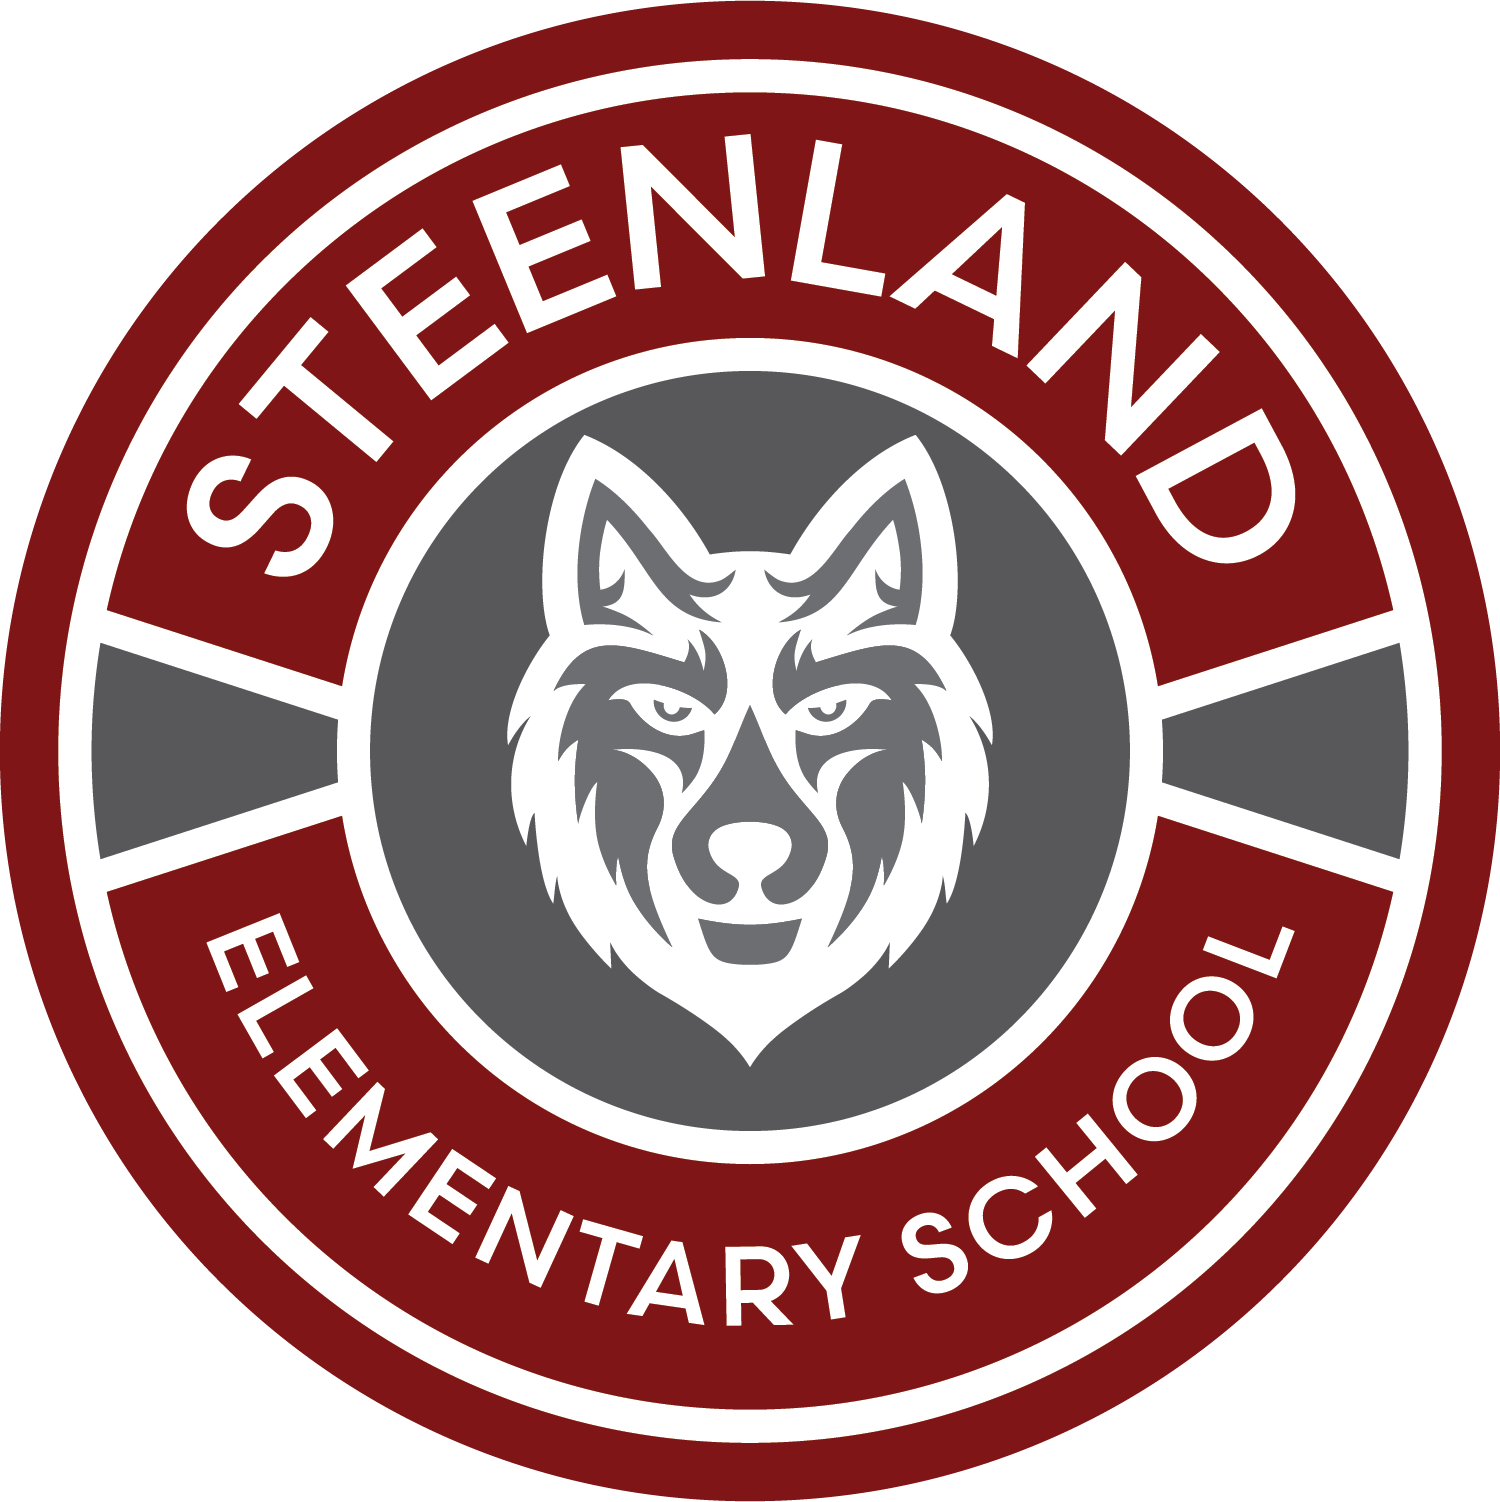 Steenland Elementary